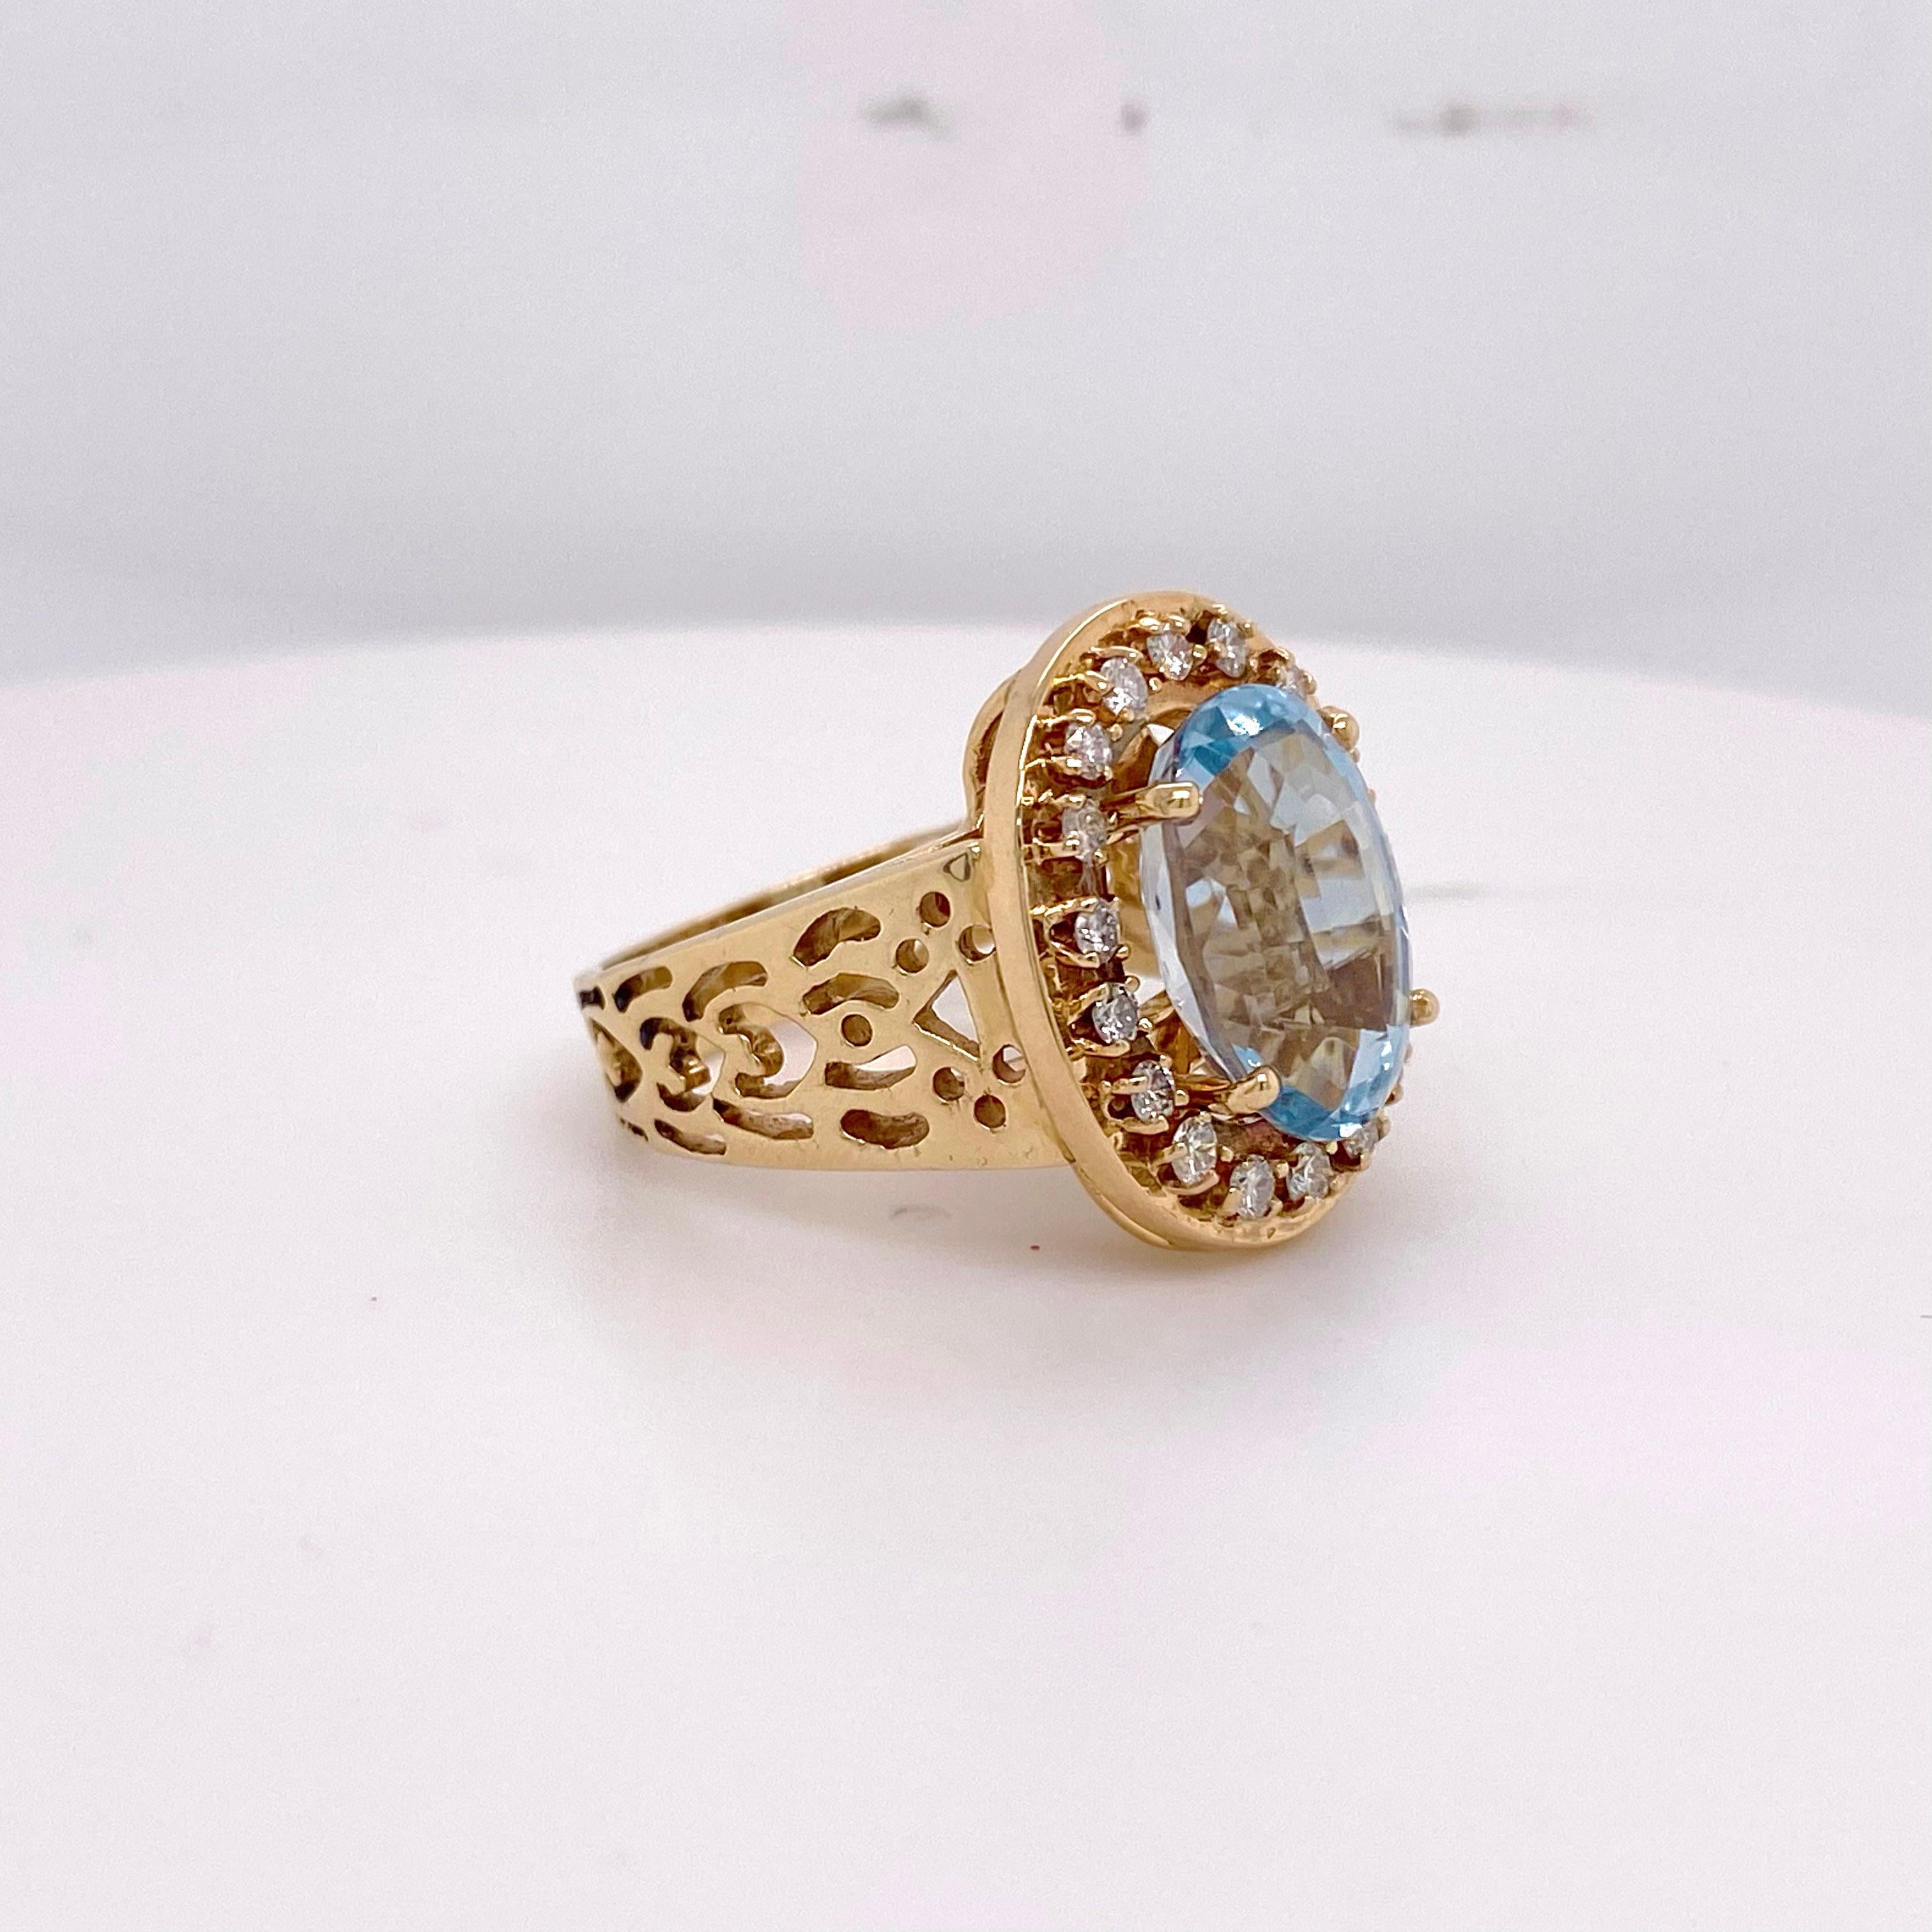 Romantic Aquamarine Diamond Ring, 5.55 Carats 14K Gold Filigree Design with Diamond Halo For Sale